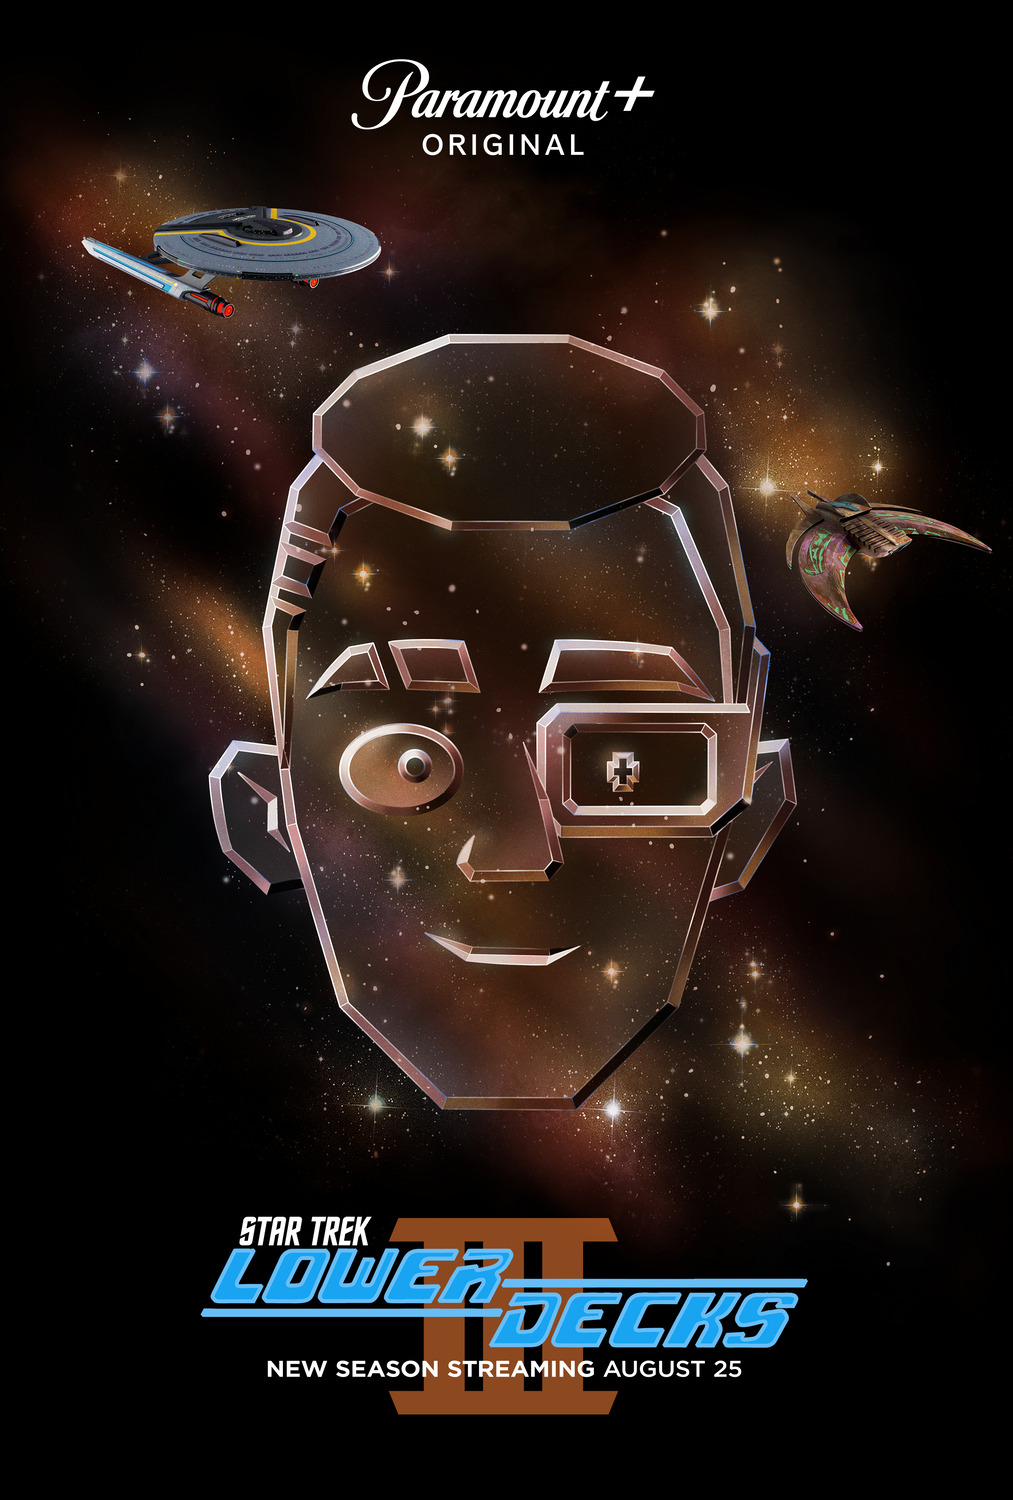 Extra Large TV Poster Image for Star Trek: Lower Decks (#8 of 12)